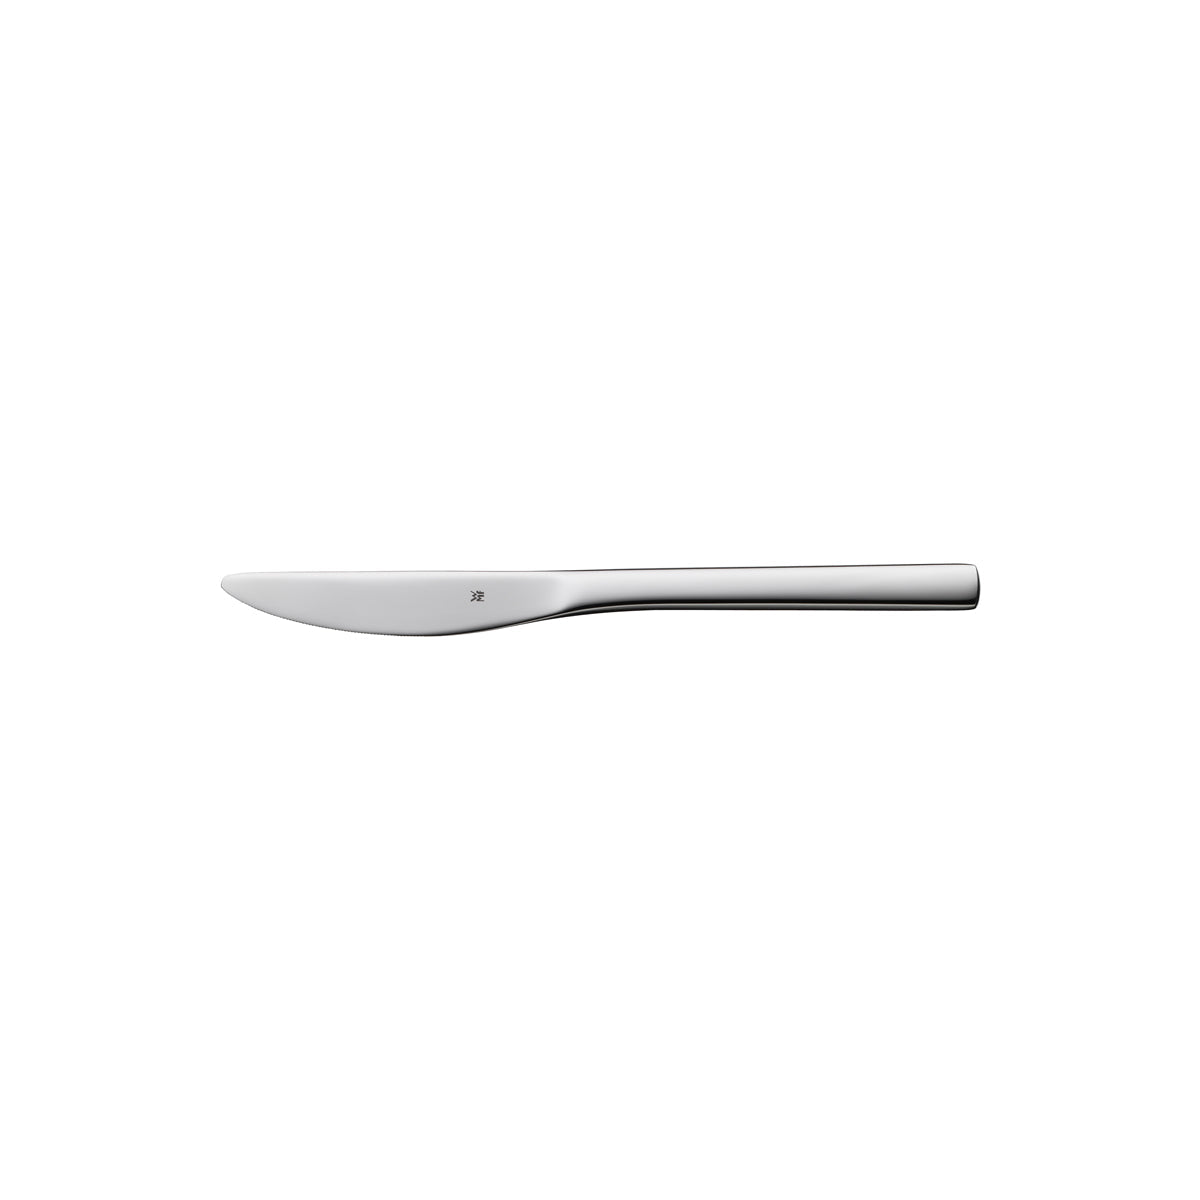 54.8503.6049 WMF Elea Table Knife Stainless Steel Tomkin Australia Hospitality Supplies